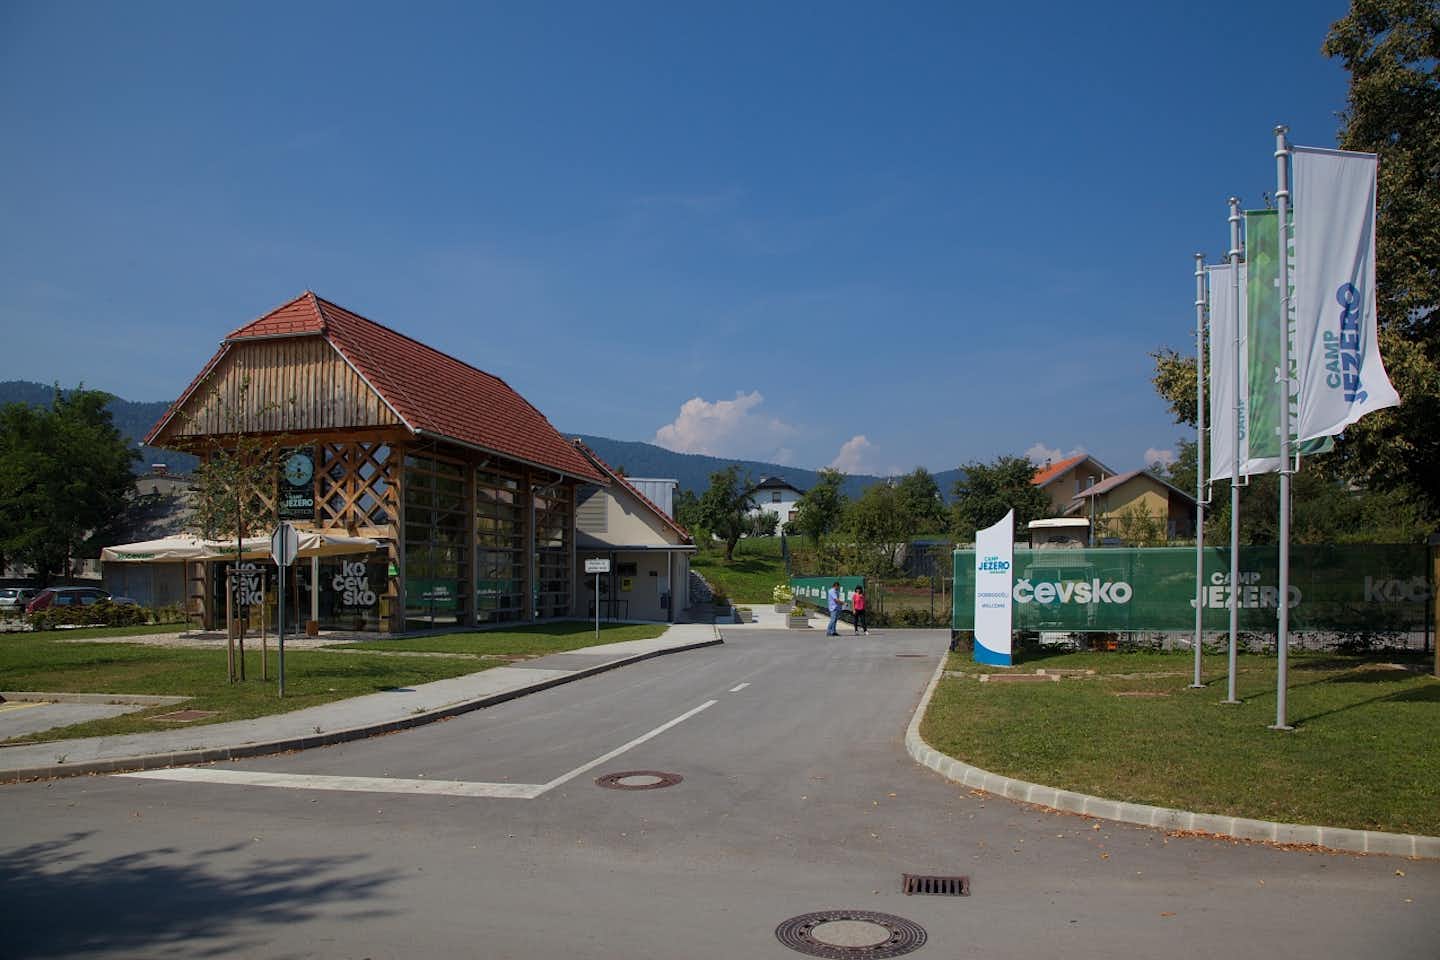 Camp Jezero Kocevsko - Eingang des Campingplatzes